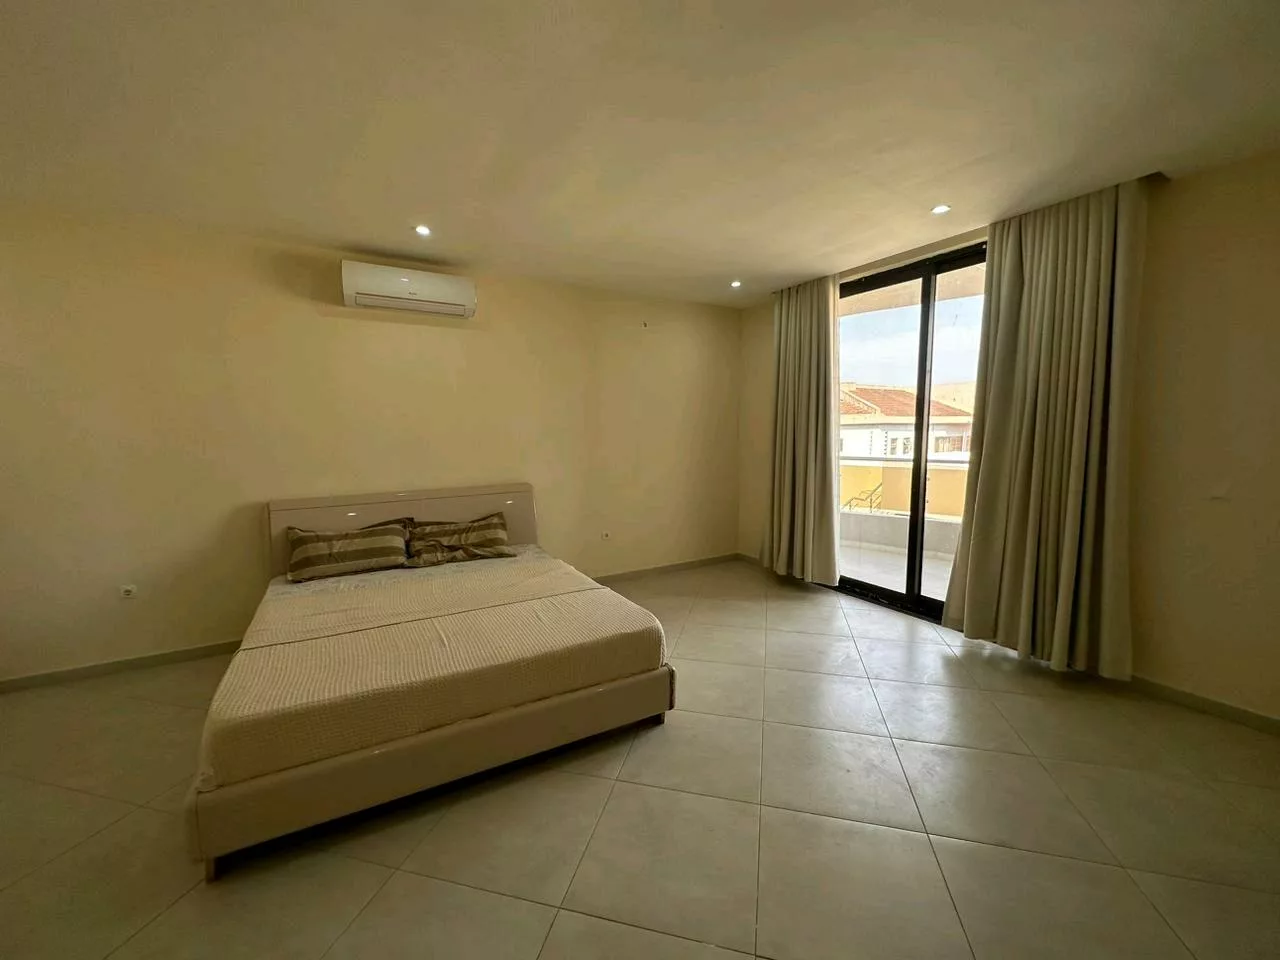 5-Bedroom House for Rent Near Vila Sol Condominium, Triunfo